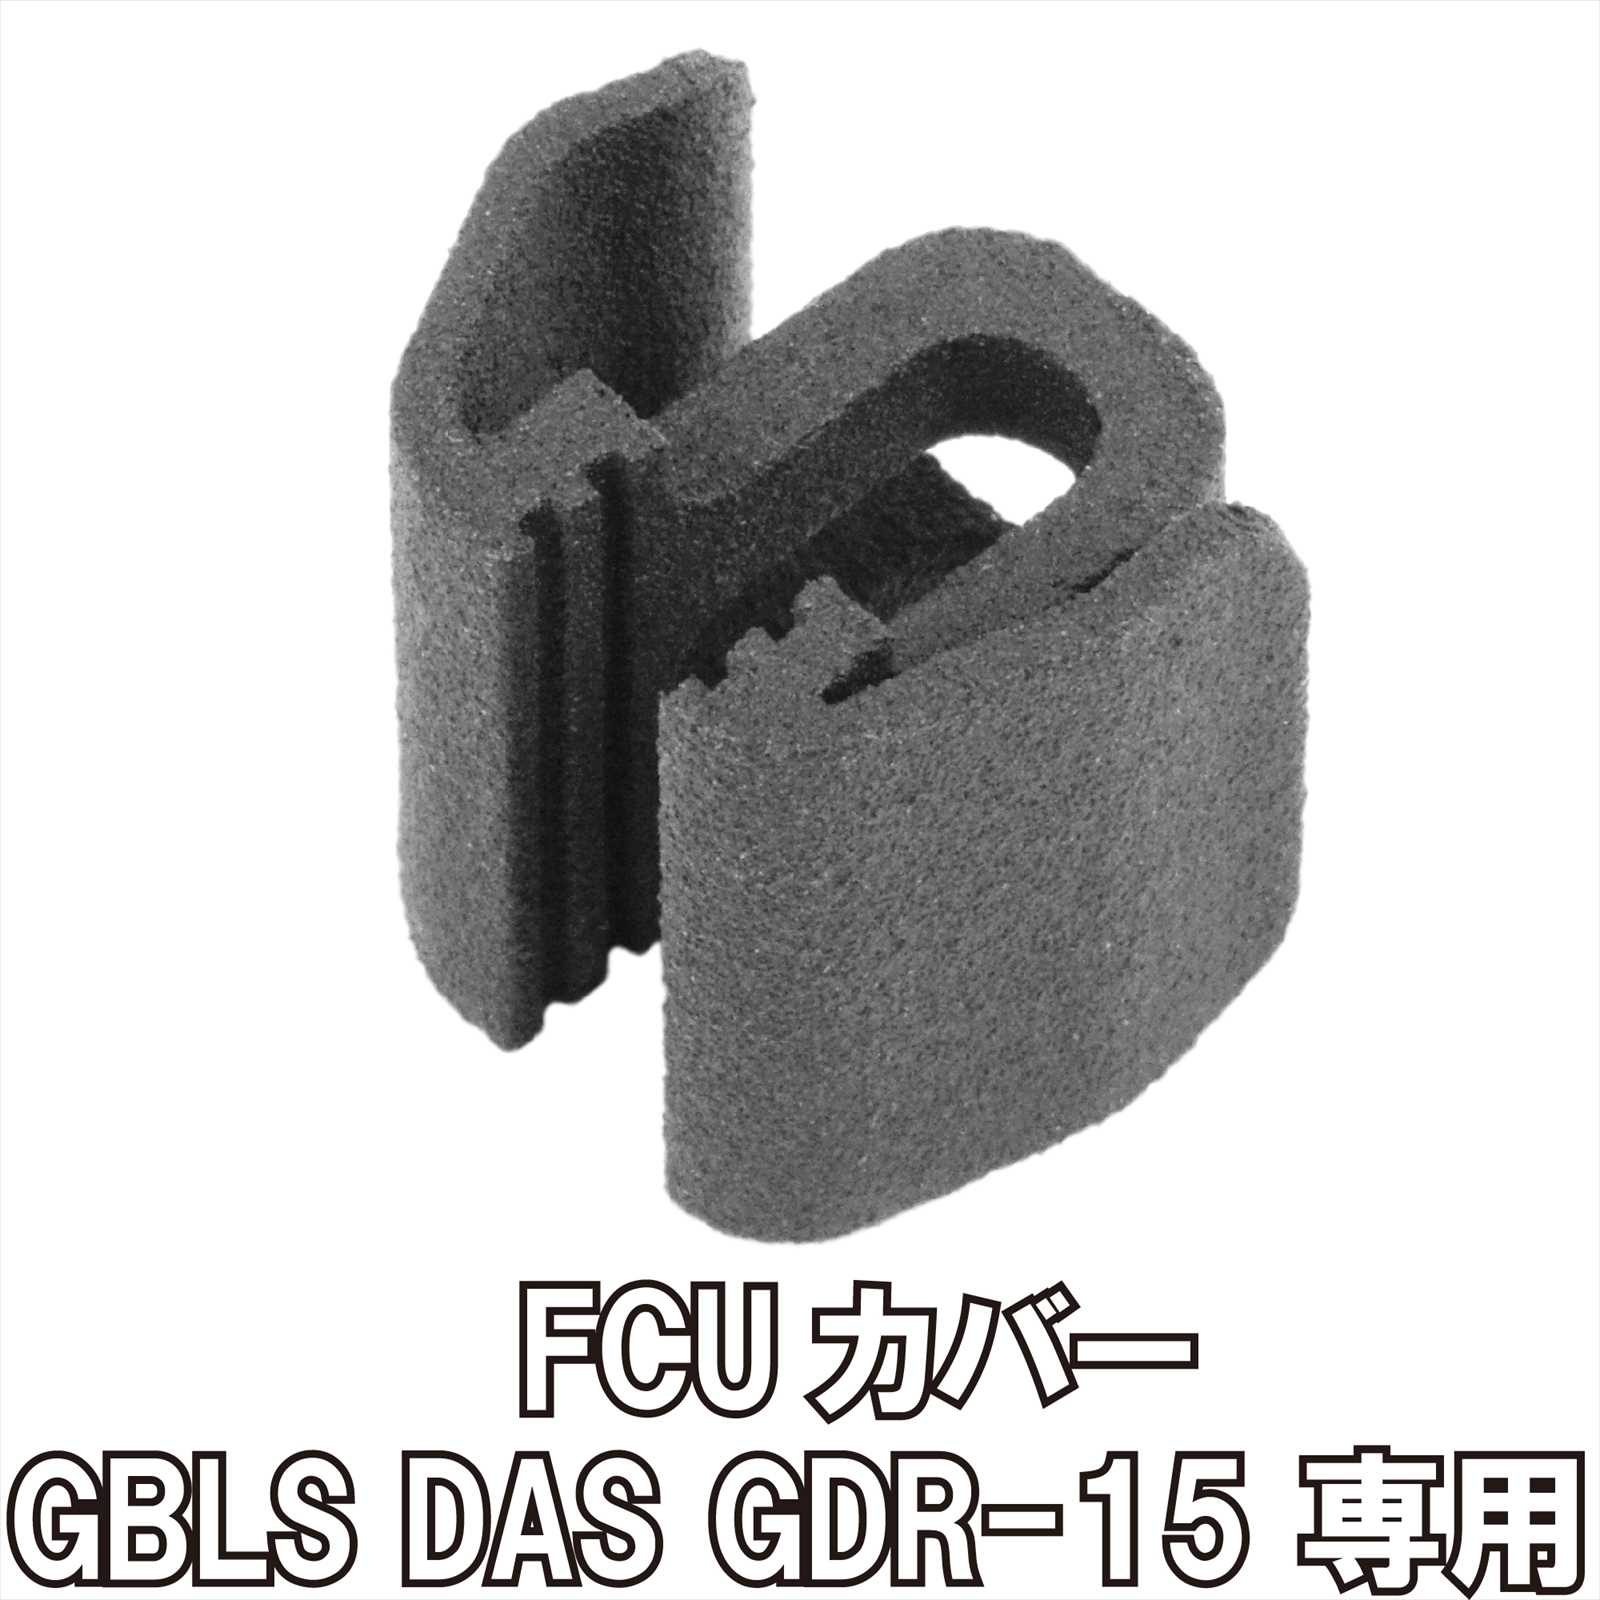 DCI Guns GBLS DAS GDR-15専用FCUカバー Ver.2 for Quick access